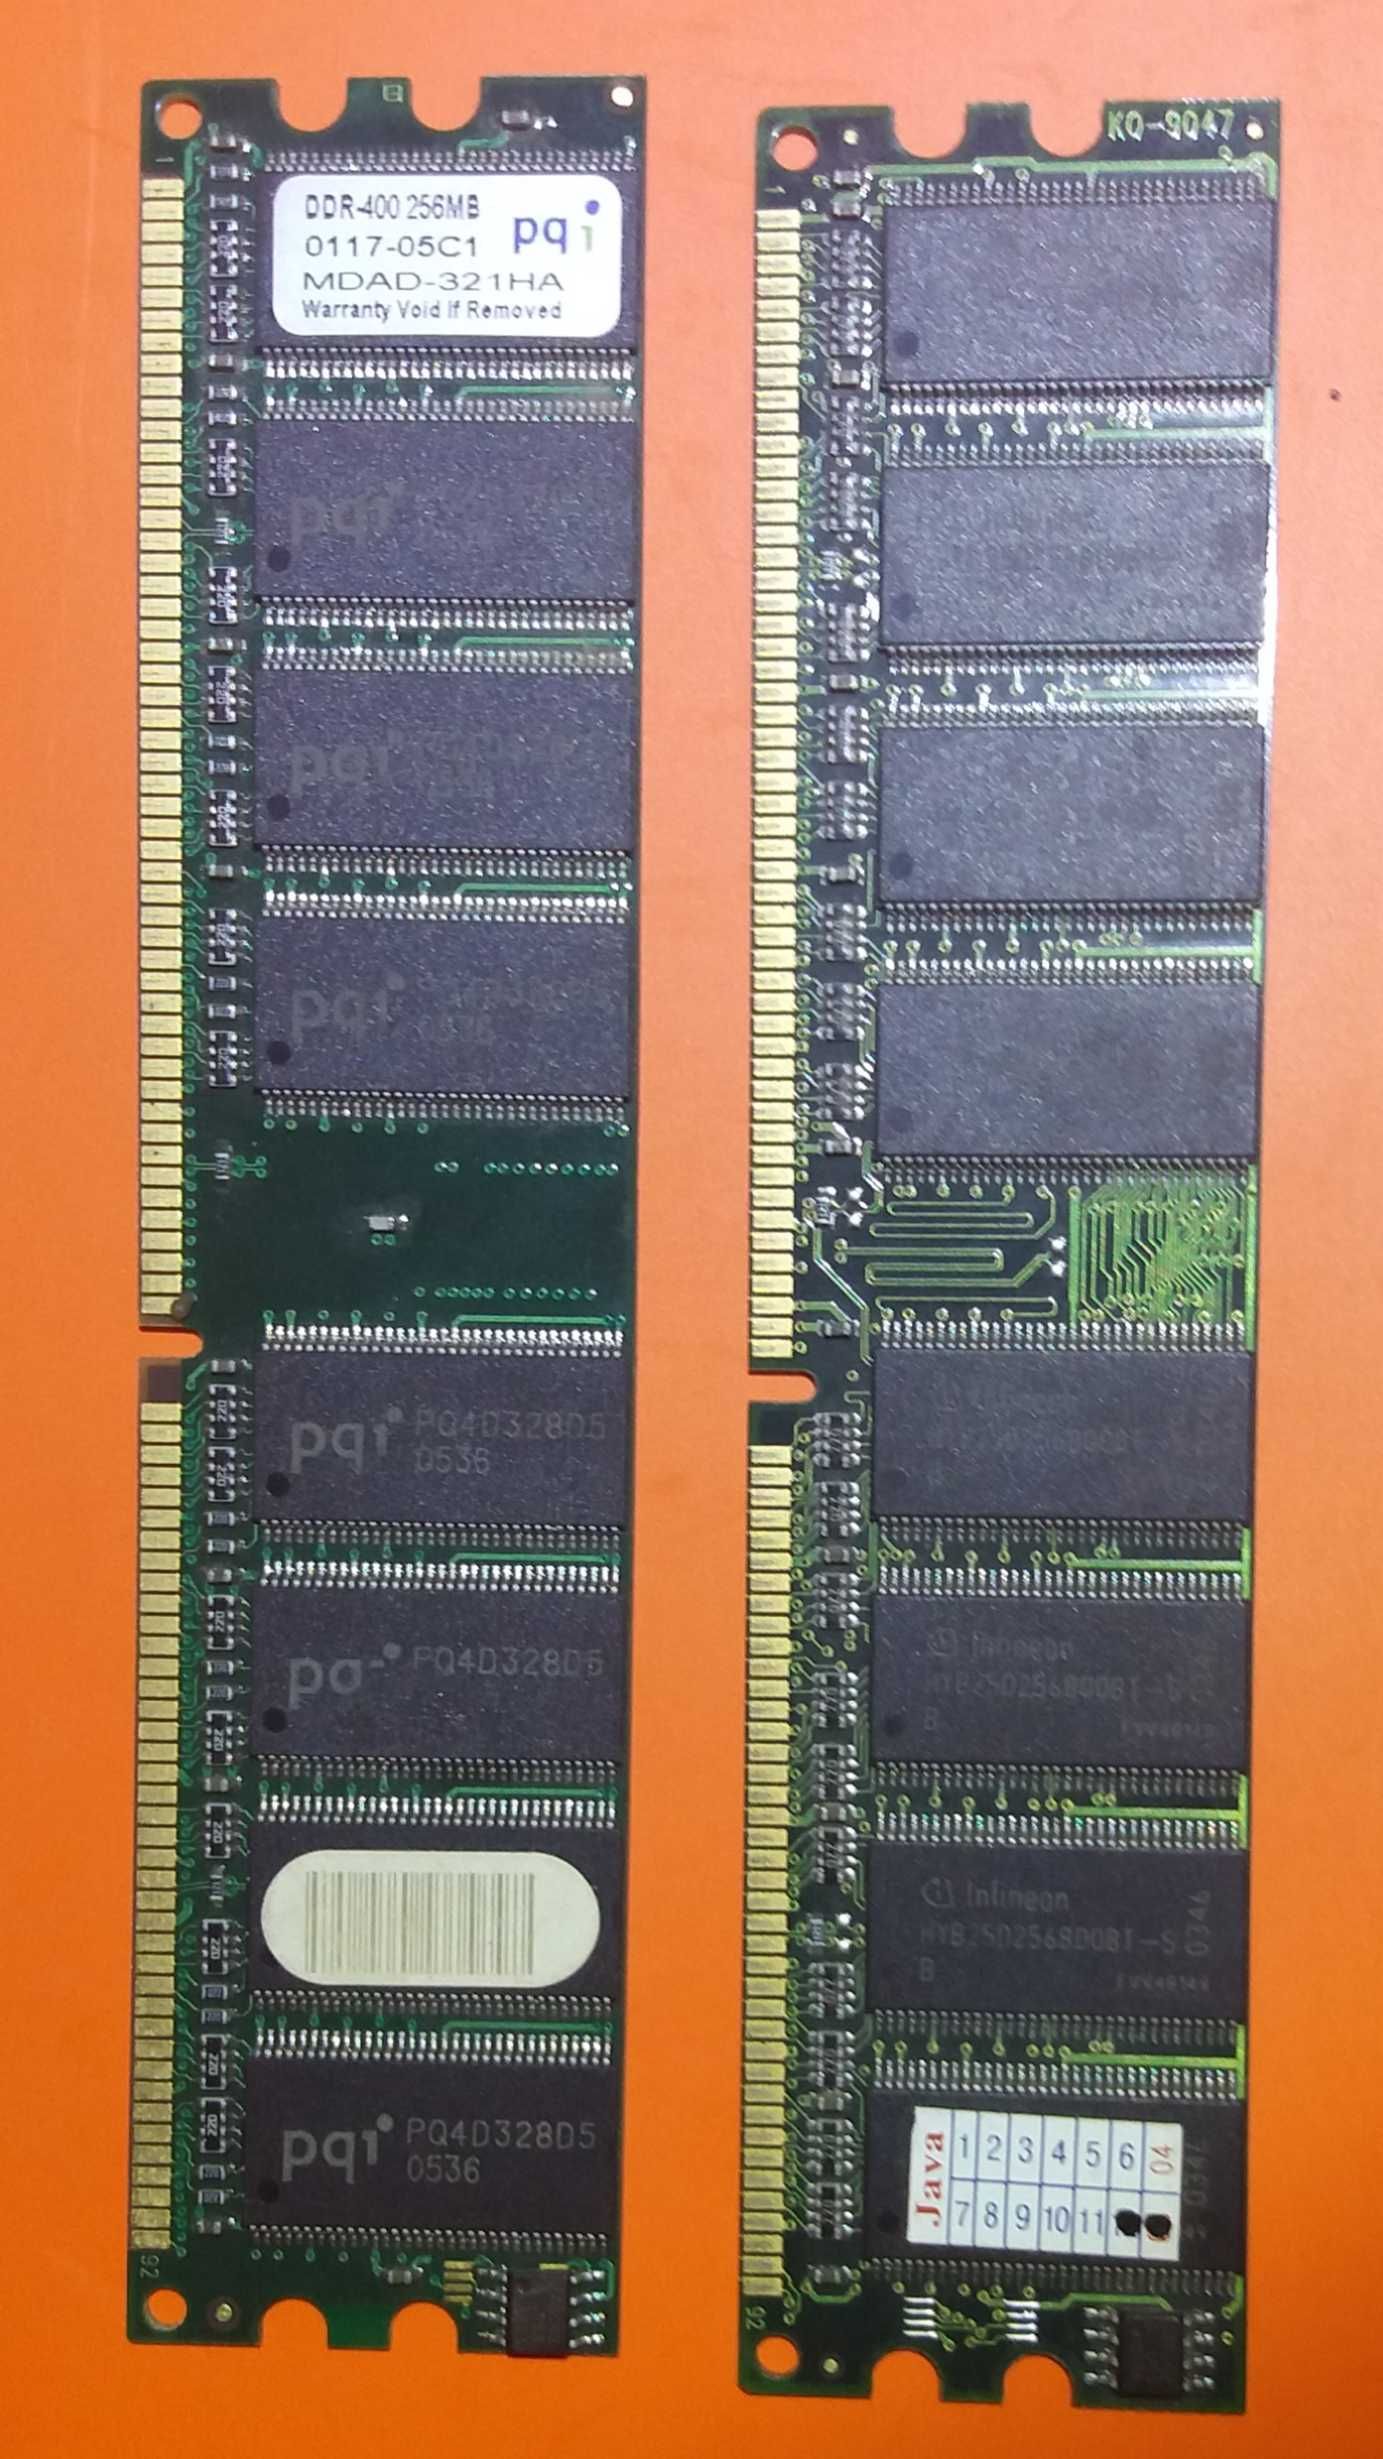 DDR-400 Оперативная память 256 МВ планка ОЗУ